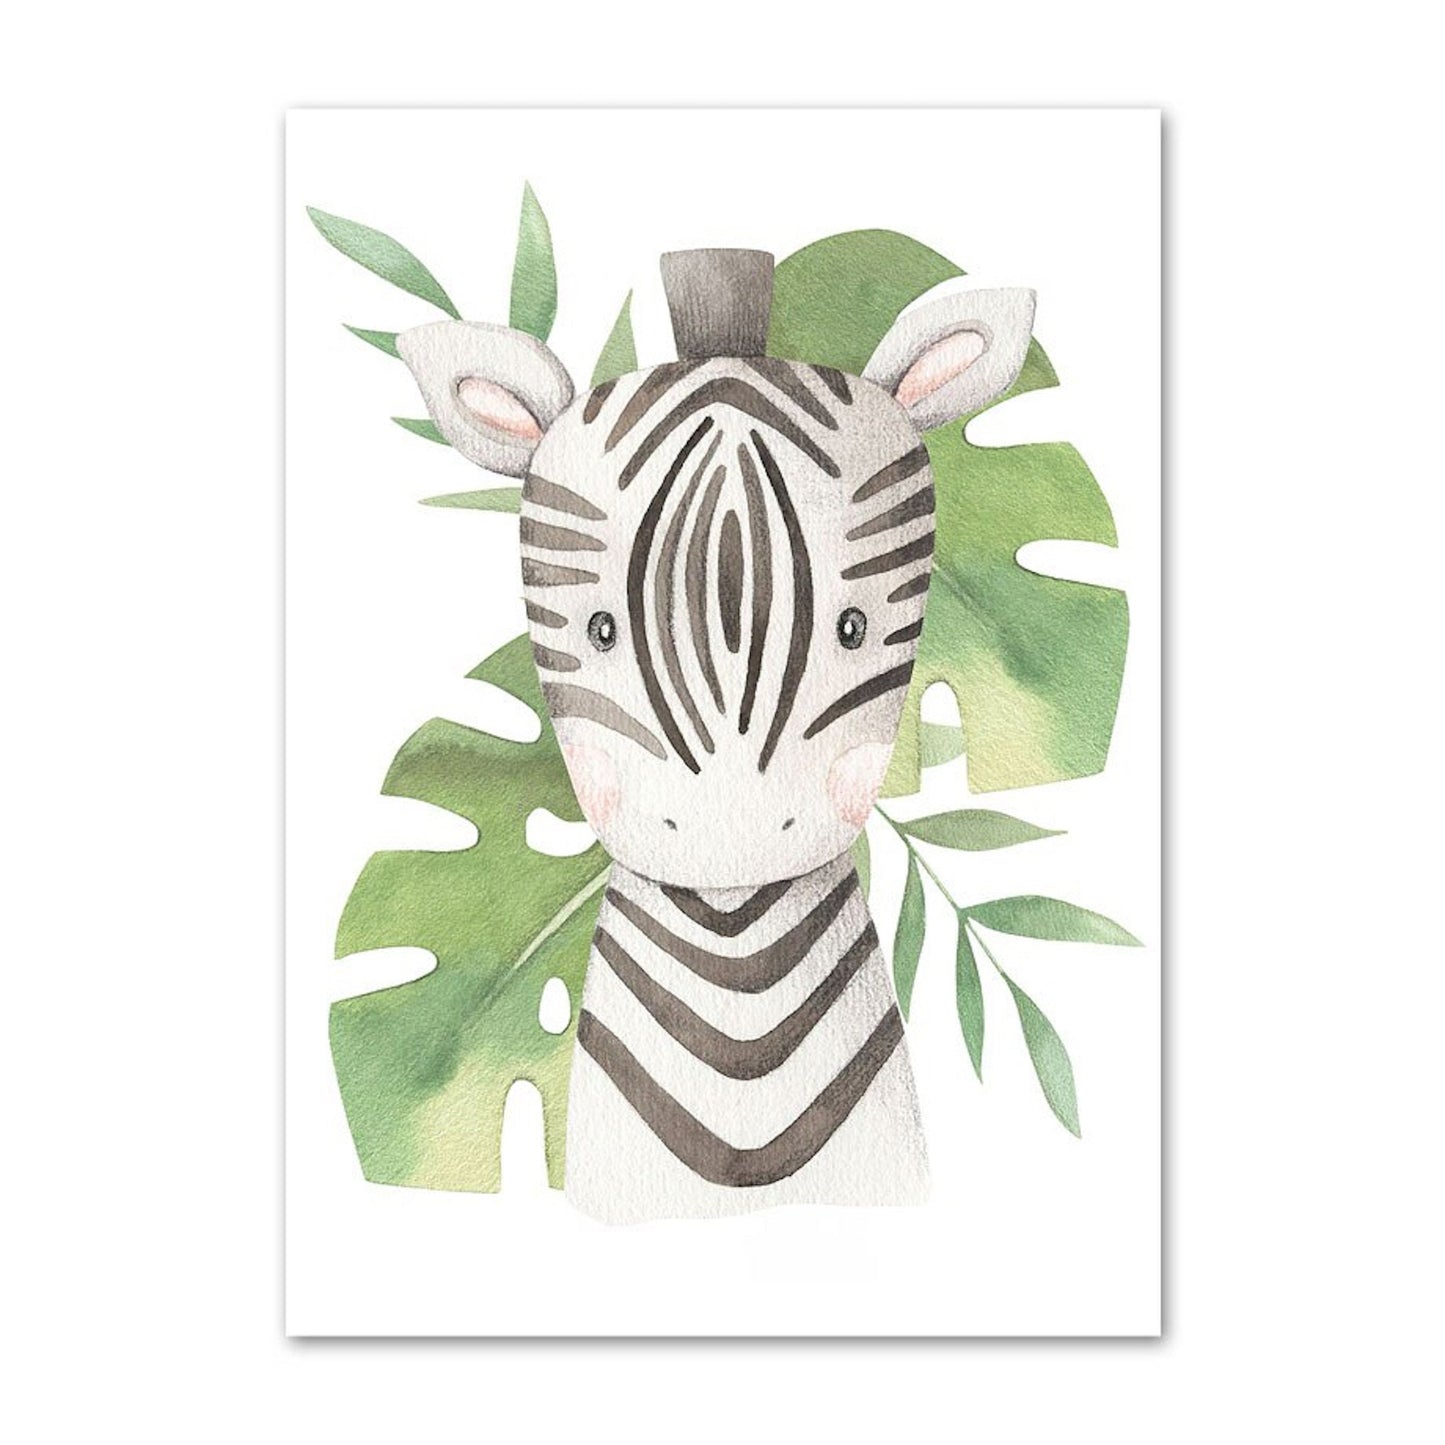 Poster Kinder süße Tiere mit Grünem Blatt Pandabär Giraffe Elefant Löwe Zebra Affe und Tiger als Deko Print ohne Rahmen